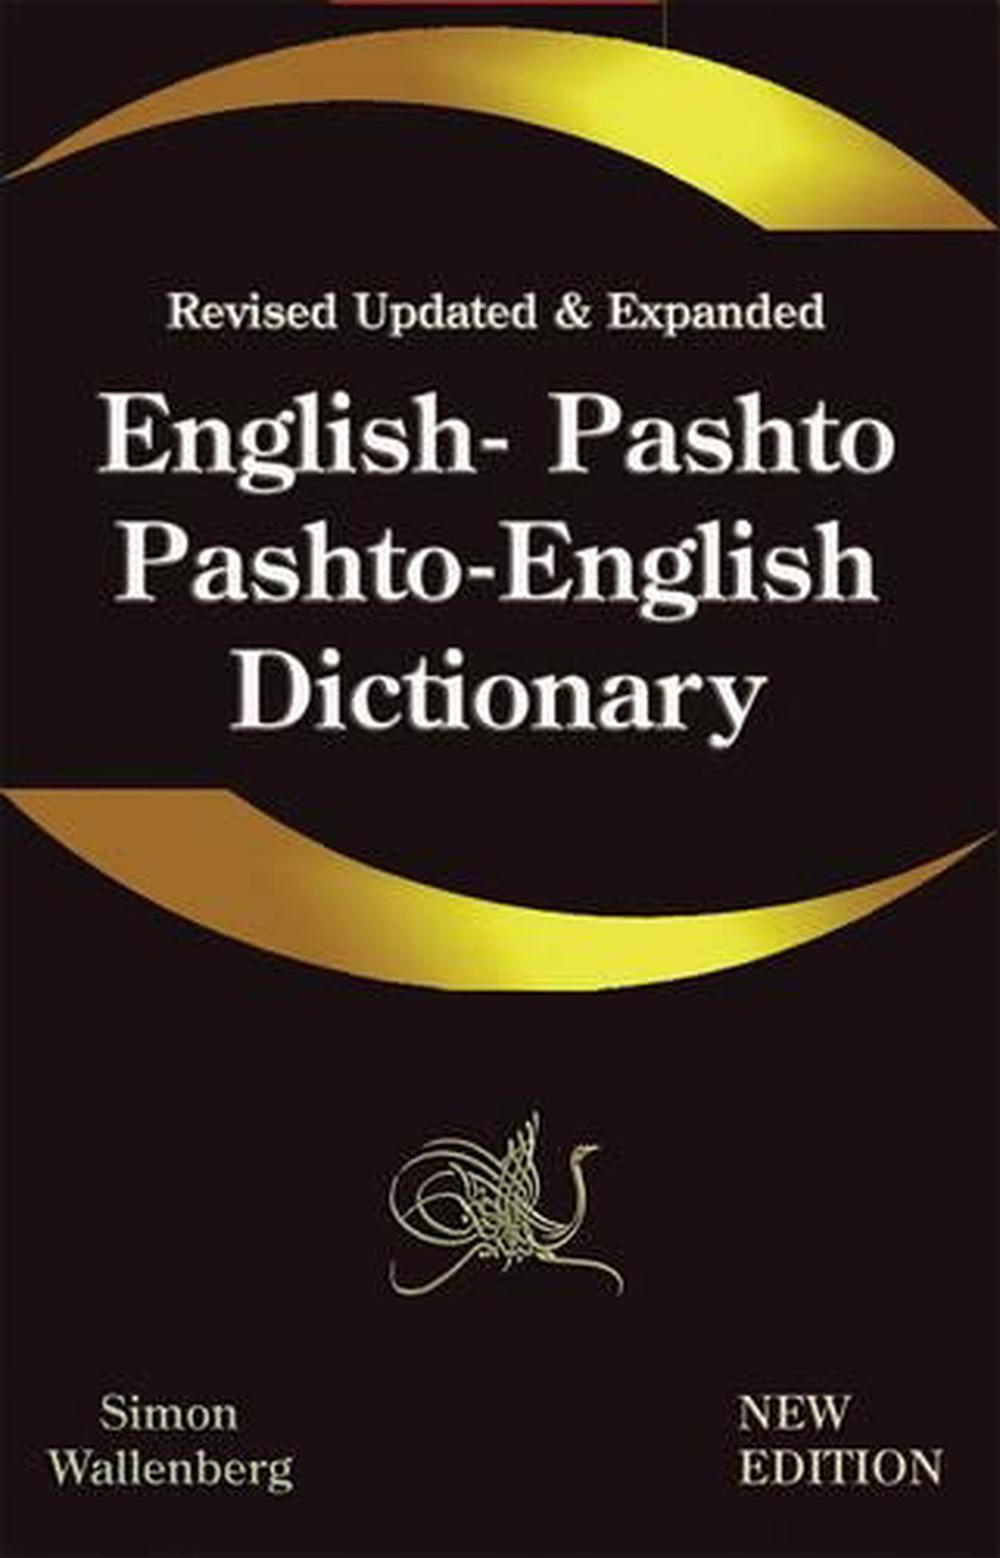 pashto dictionary java 6120c